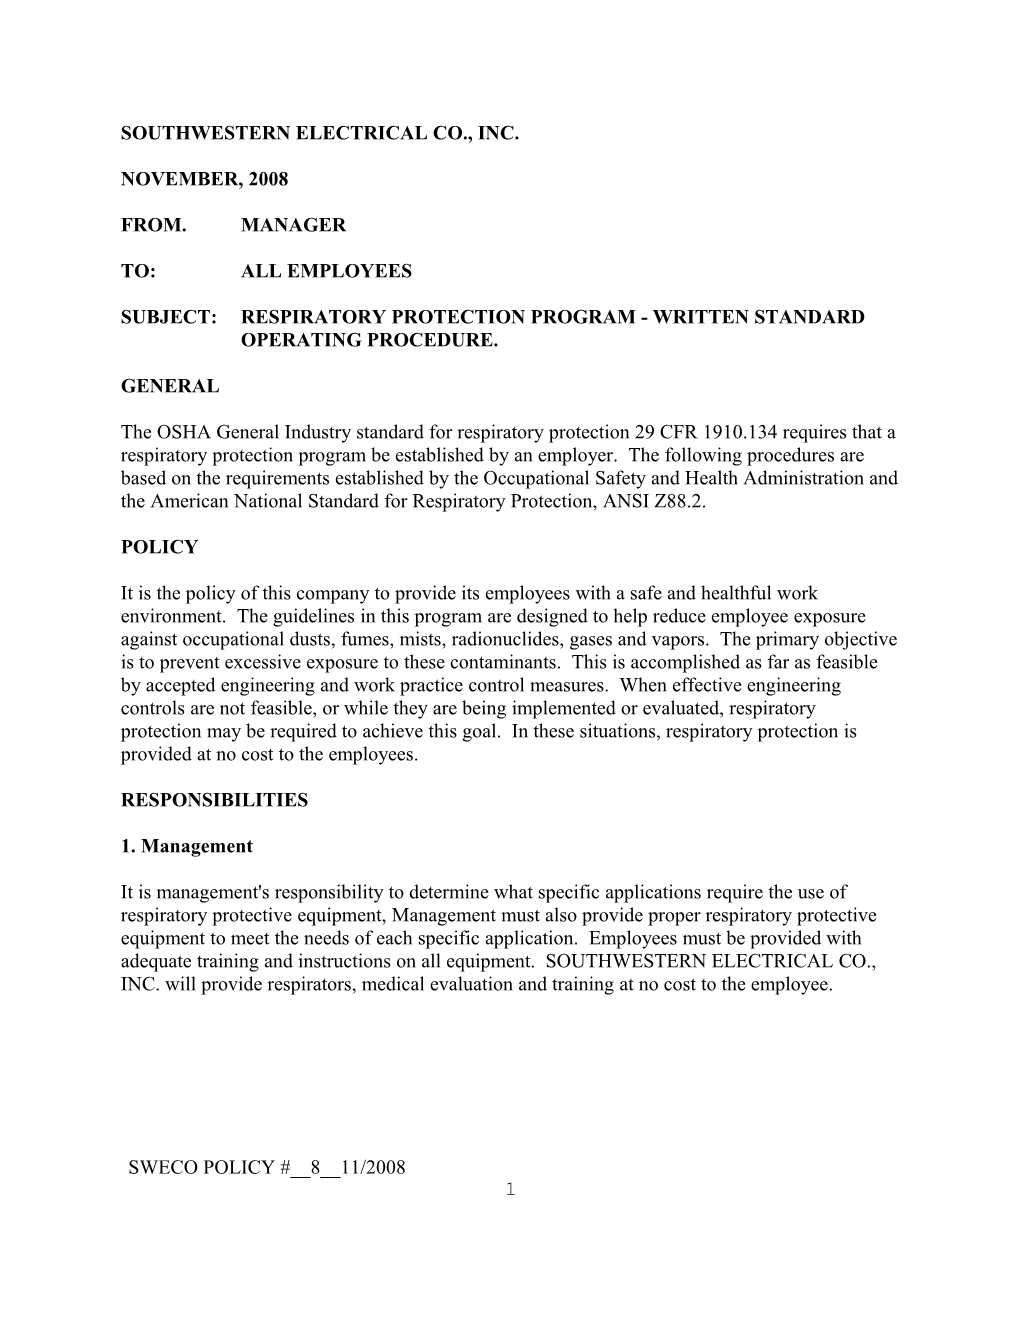 Subject:Respiratory Protection Program - Written Standard Operating Procedure